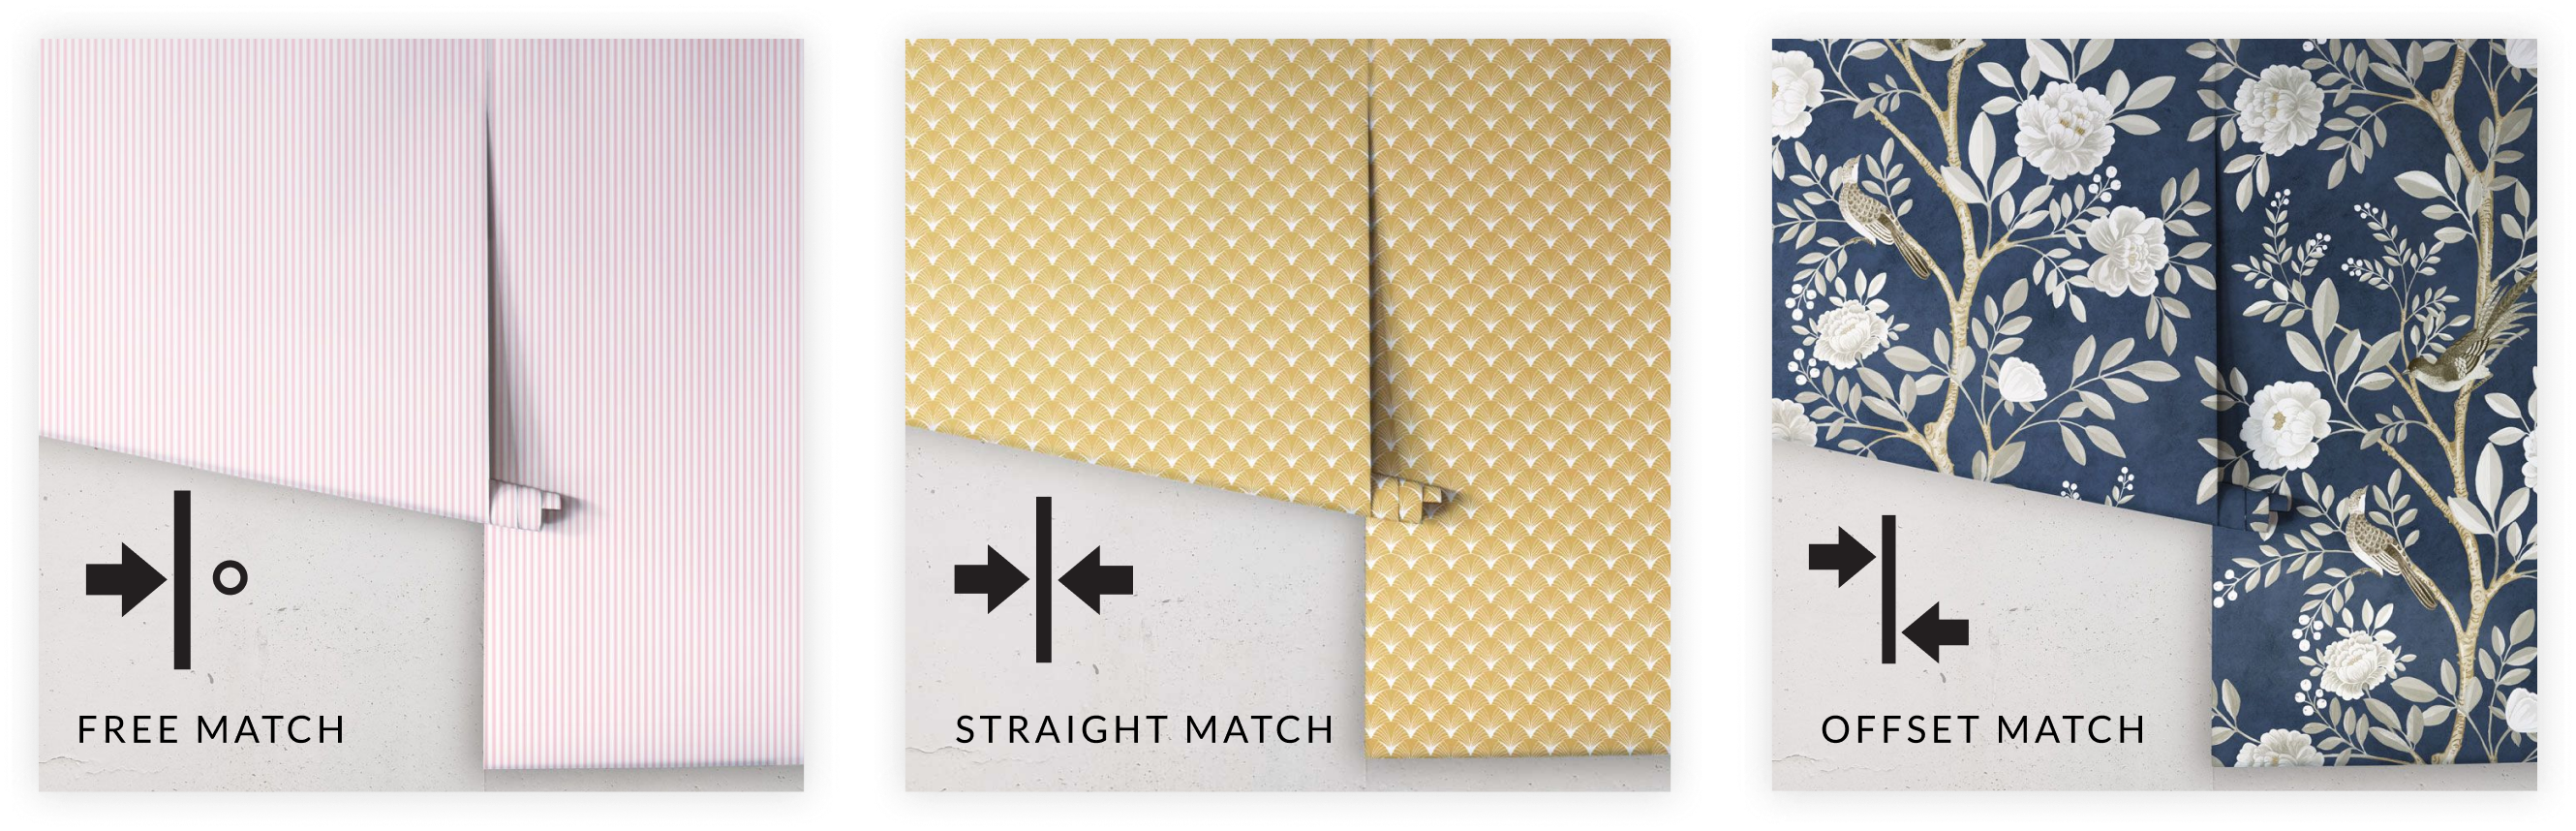 Wallpaper Match Types Illustration